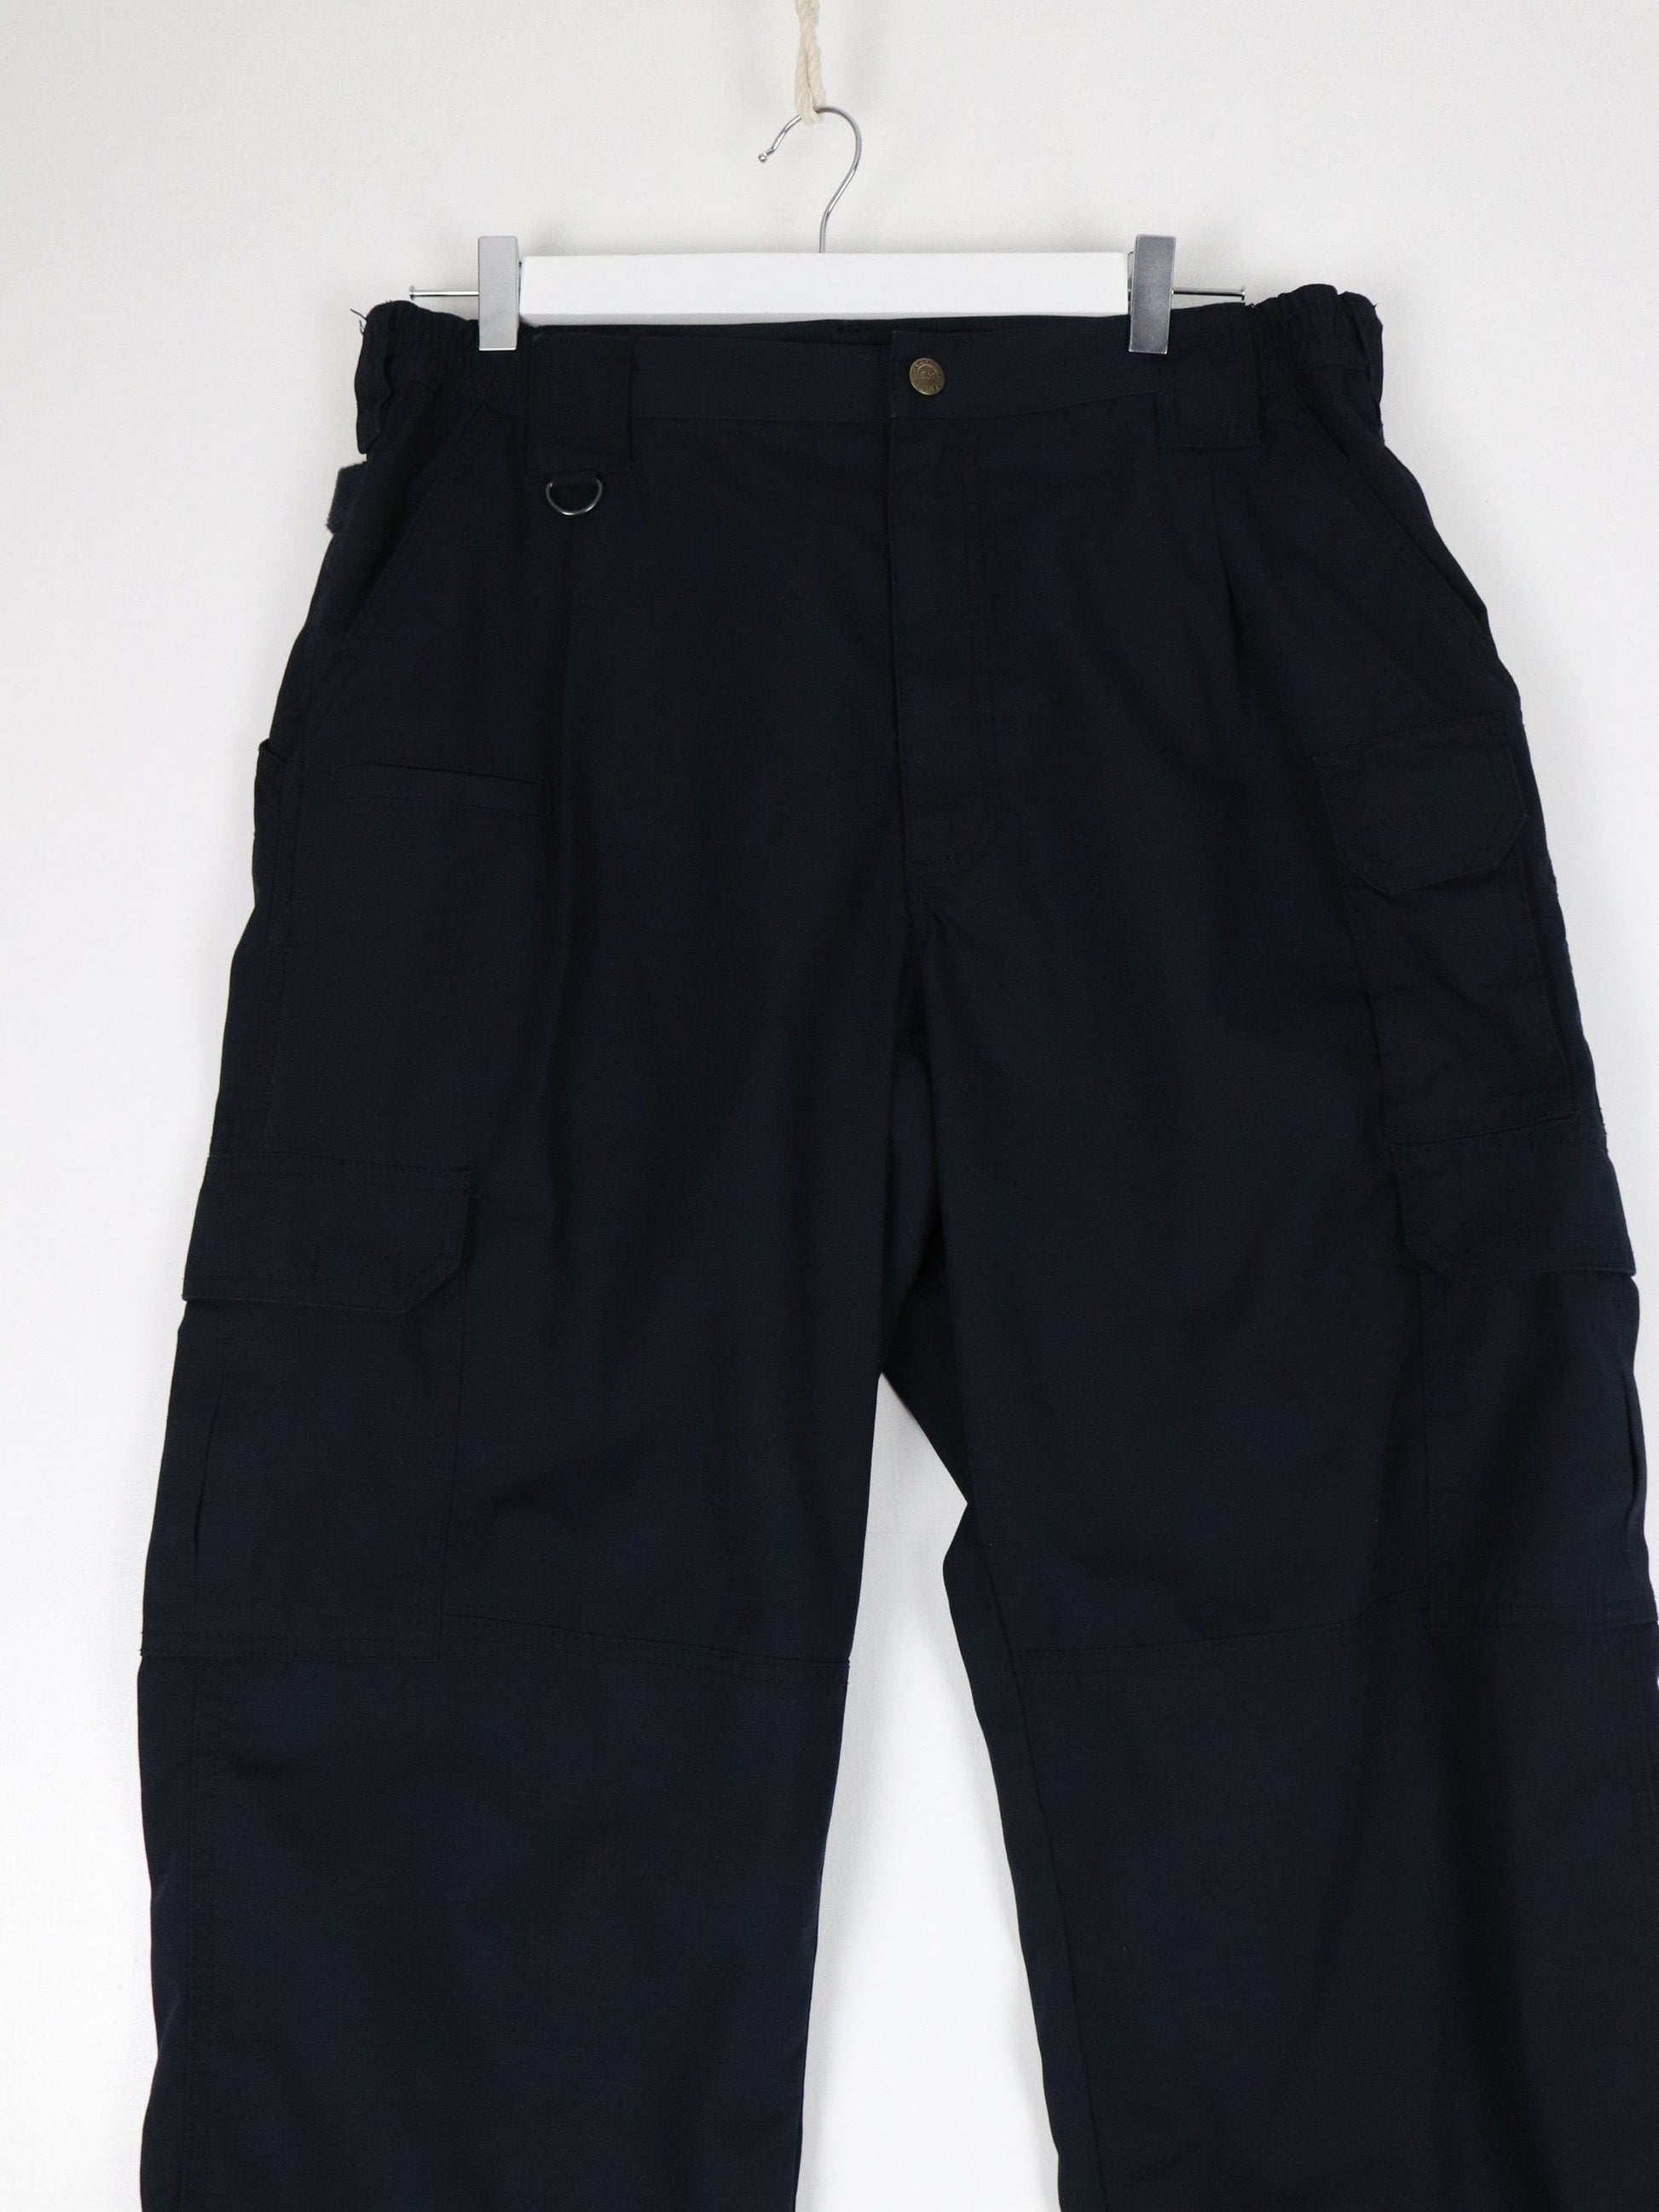 Other Pants 5.11 Tactical Pants Mens 36 x 32 Blue Cargo